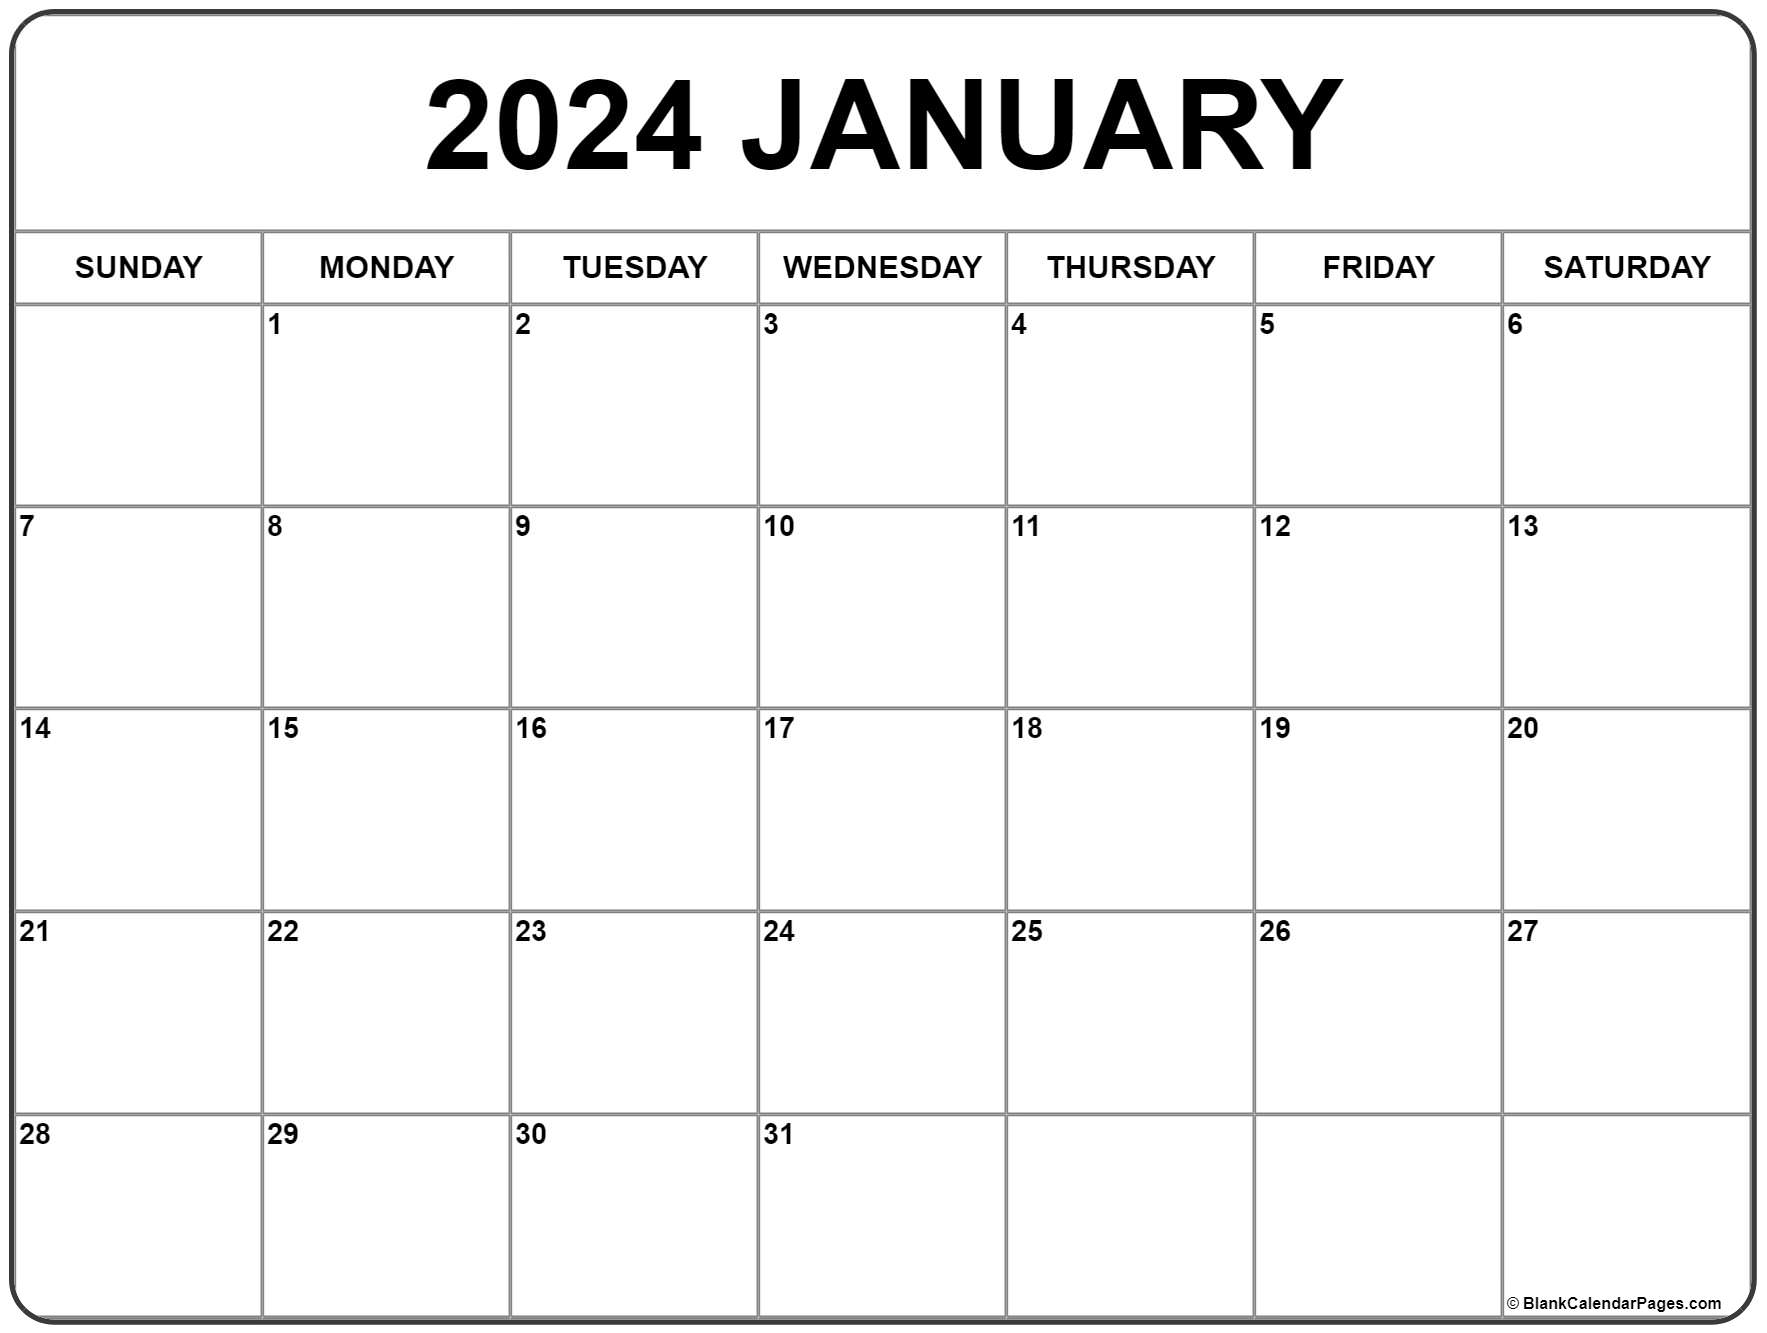 Blank January 2021 Calendar January 2021 calendar | free printable monthly calendars